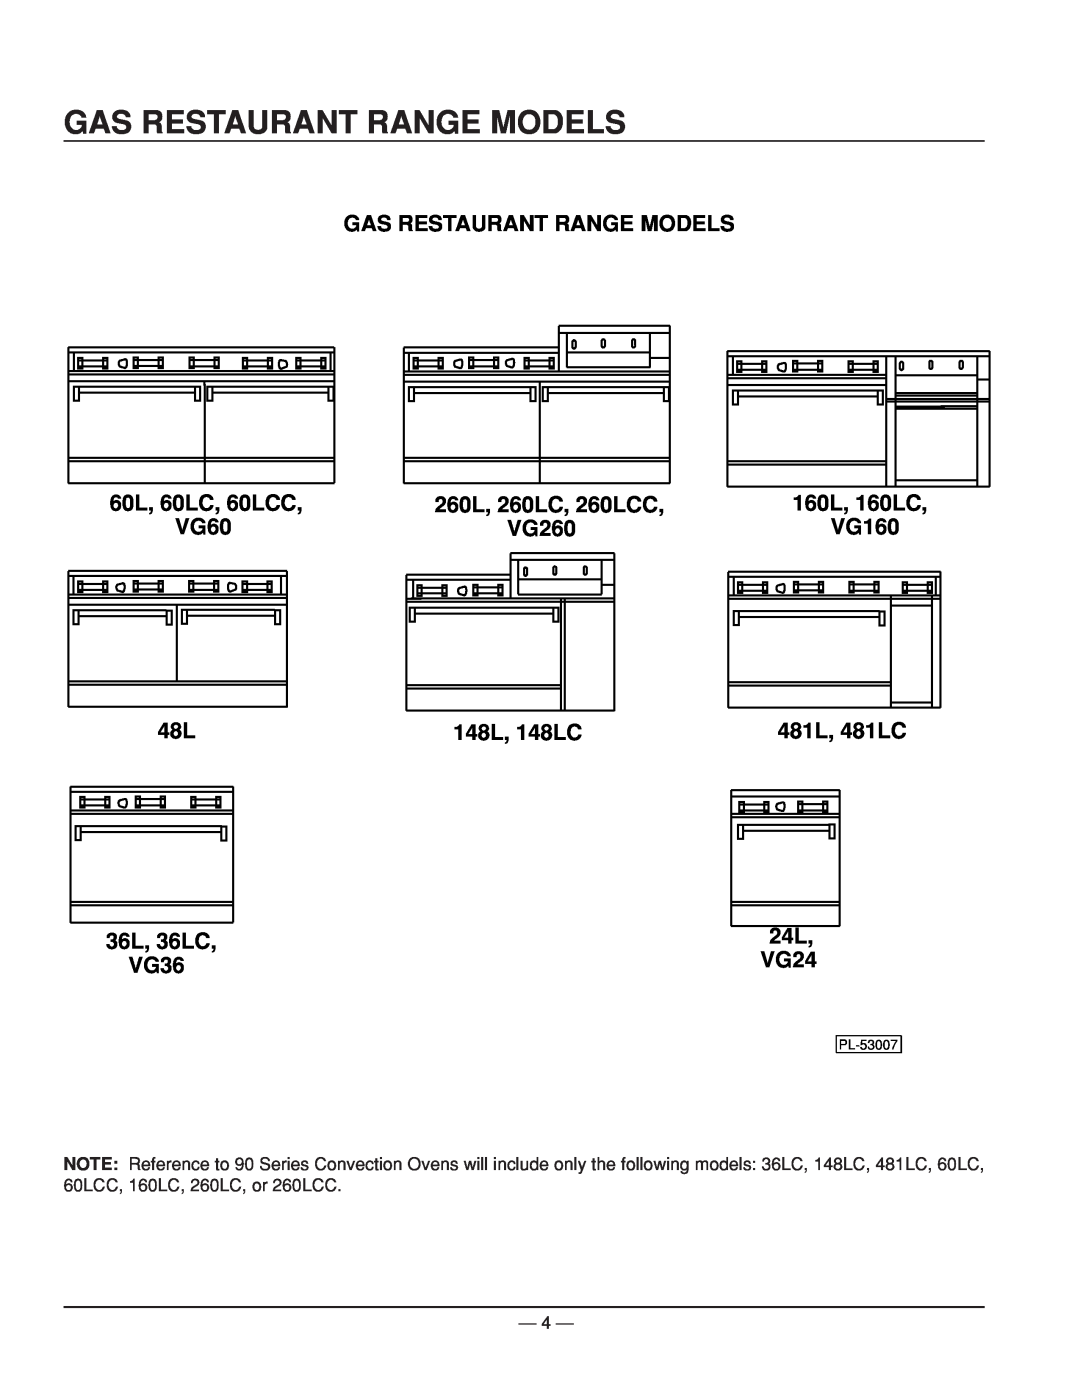 Vulcan-Hart ML-52951, ML-52953, ML-52947, ML-52950, ML-52952, ML-52949, ML-114957, ML-52948, ML-52954 Gas Restaurant Range Models 